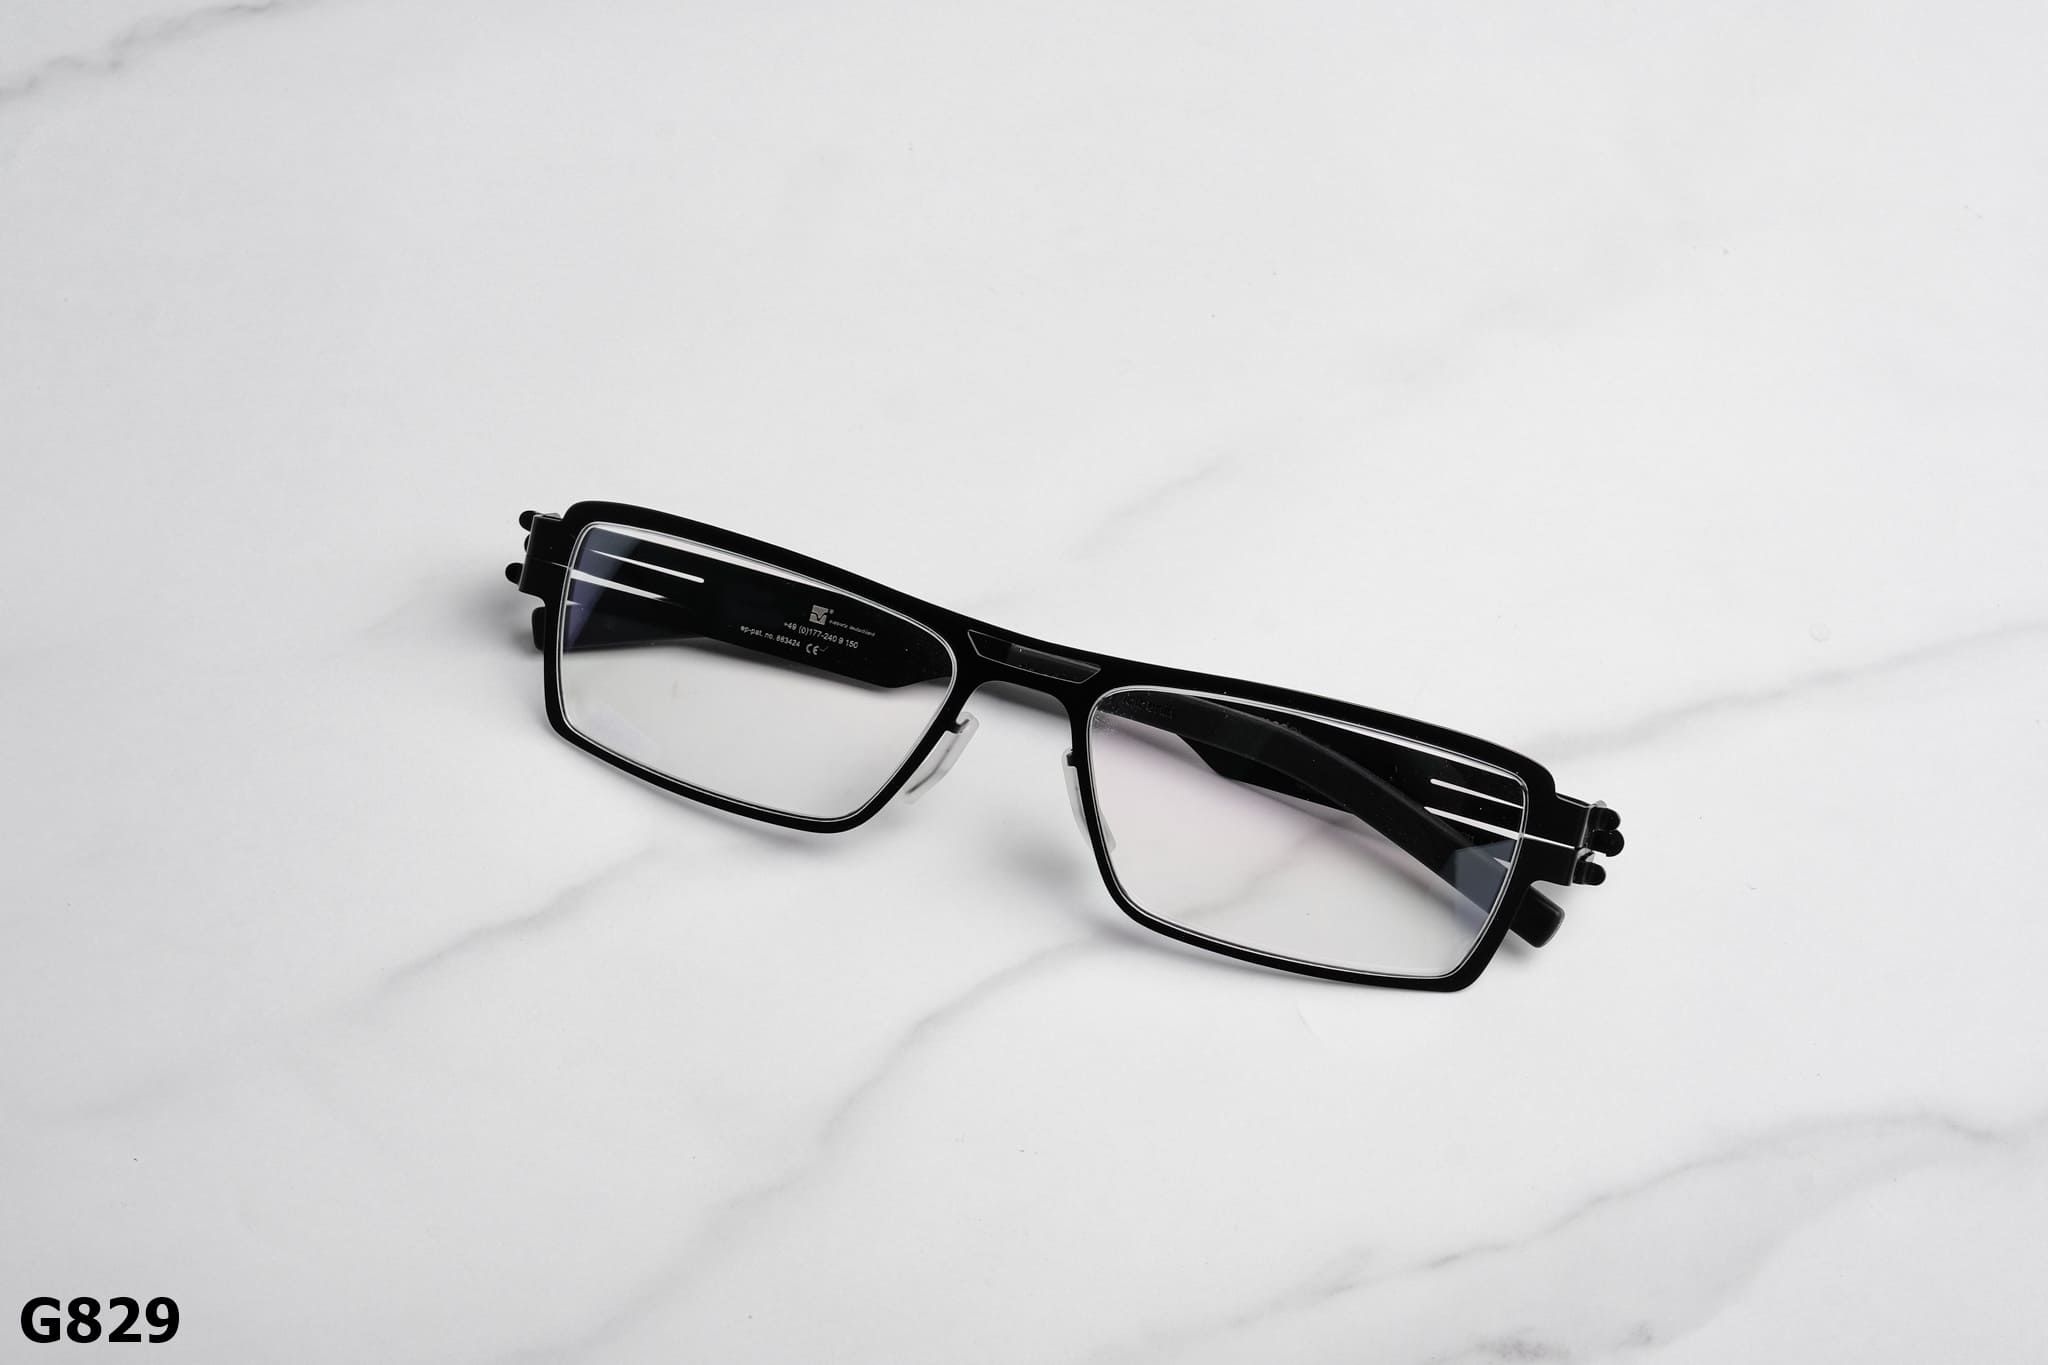  IC Eyewear - Glasses - G829 